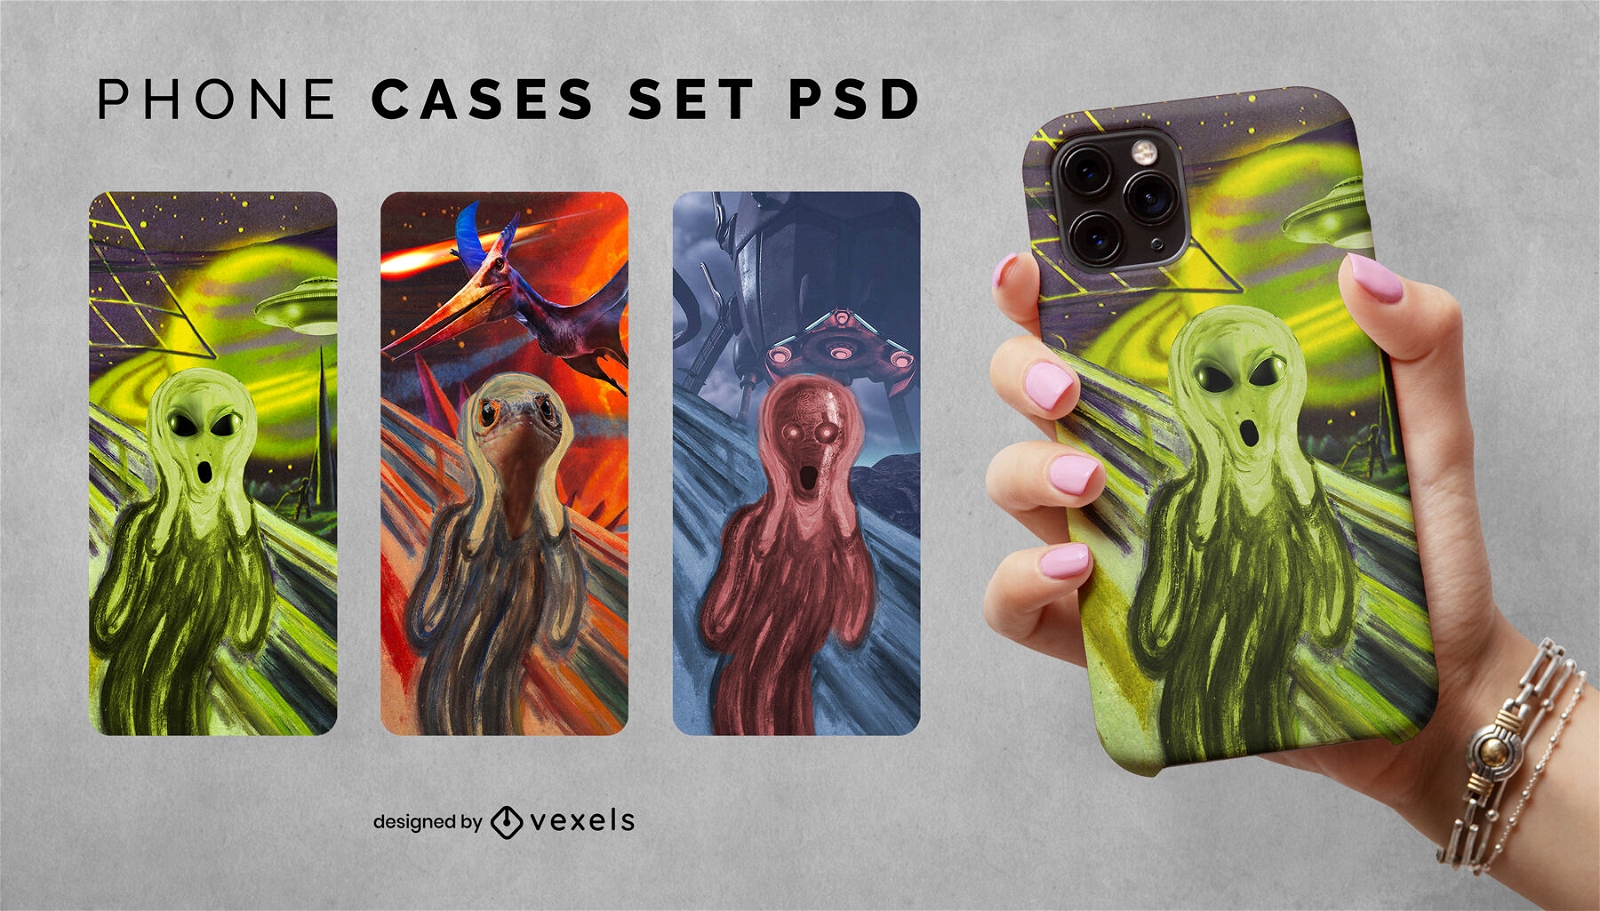 The Scream parody phone case set PSD